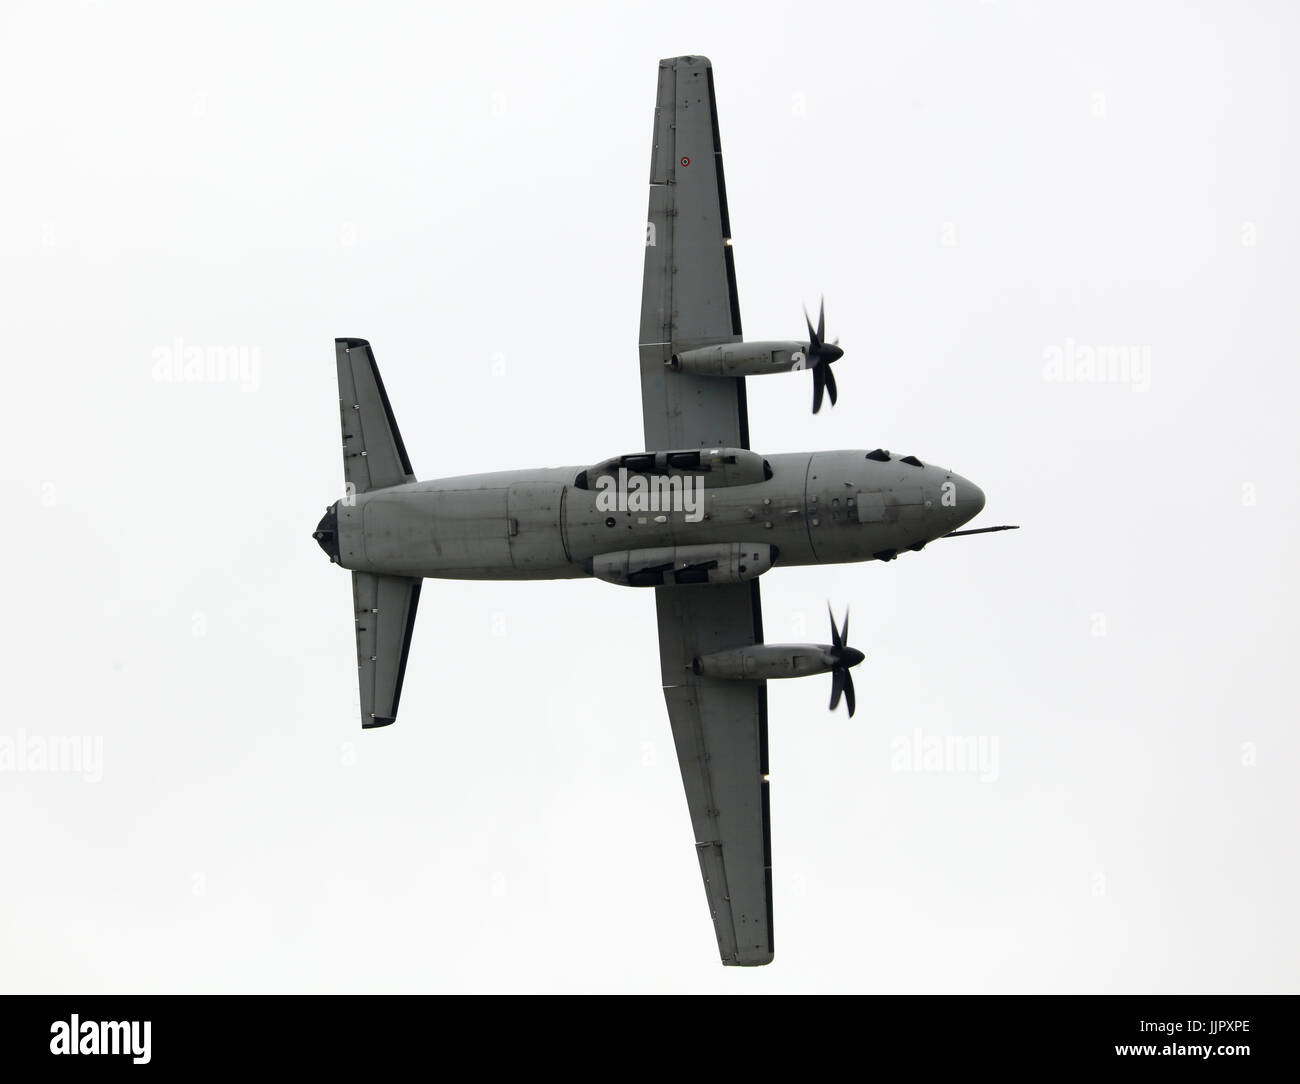 Aeronautica Militare de la fuerza aérea italiana Alenia C-29J Foto de stock